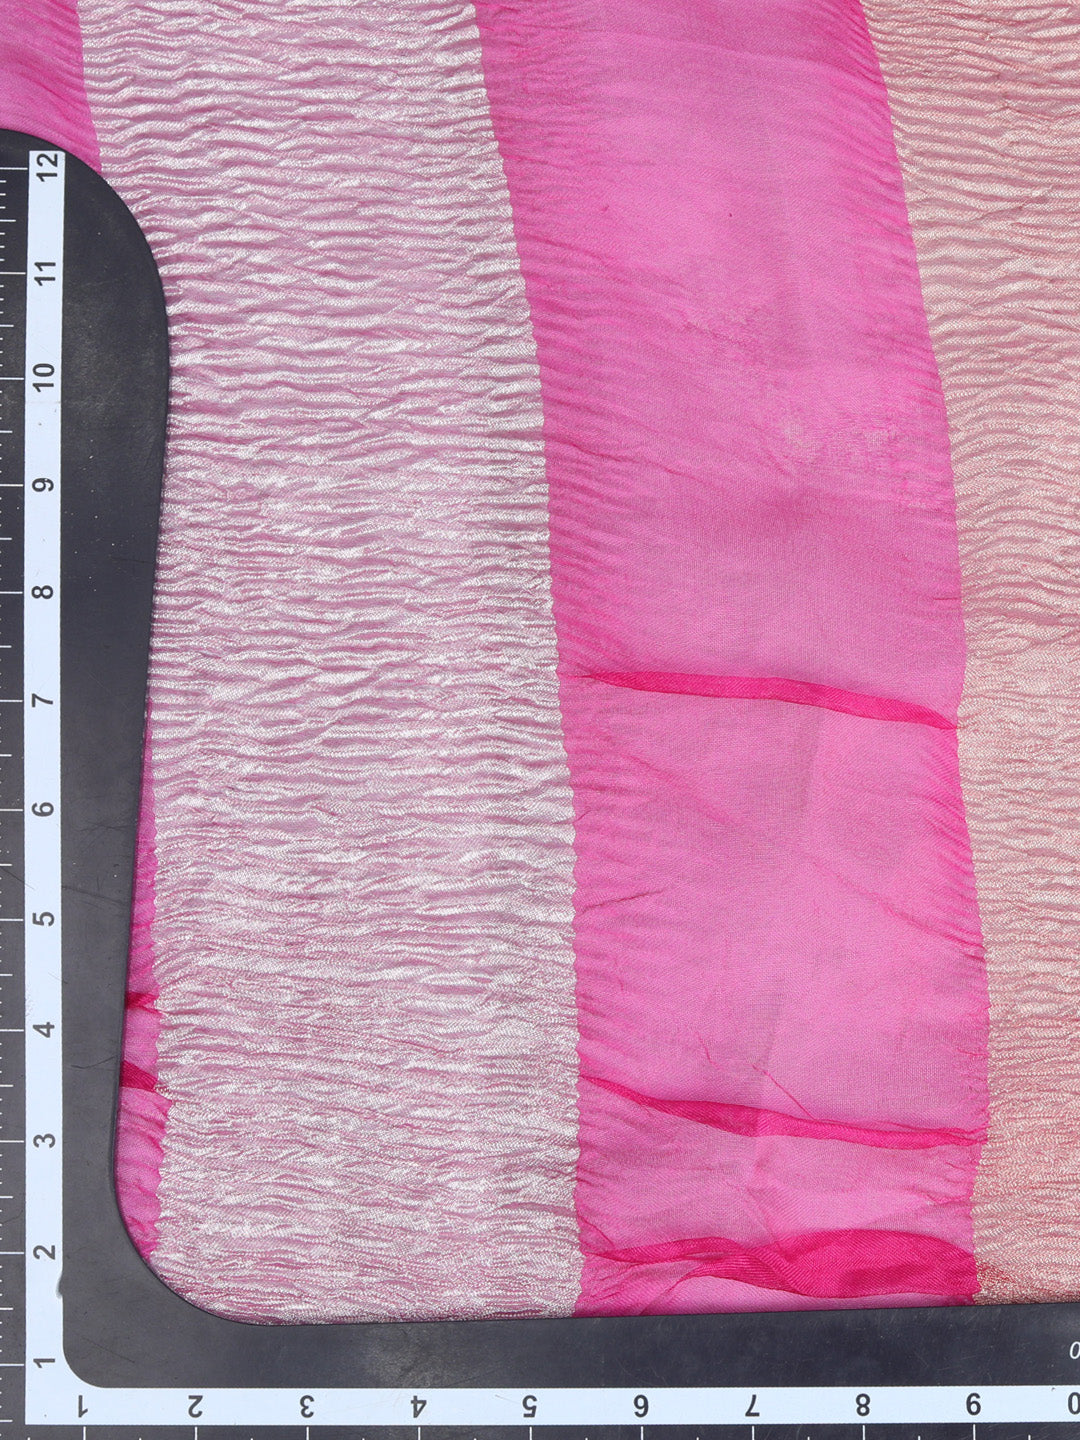 Horizontally Woven Zari On Pink Crushed Orgnaza